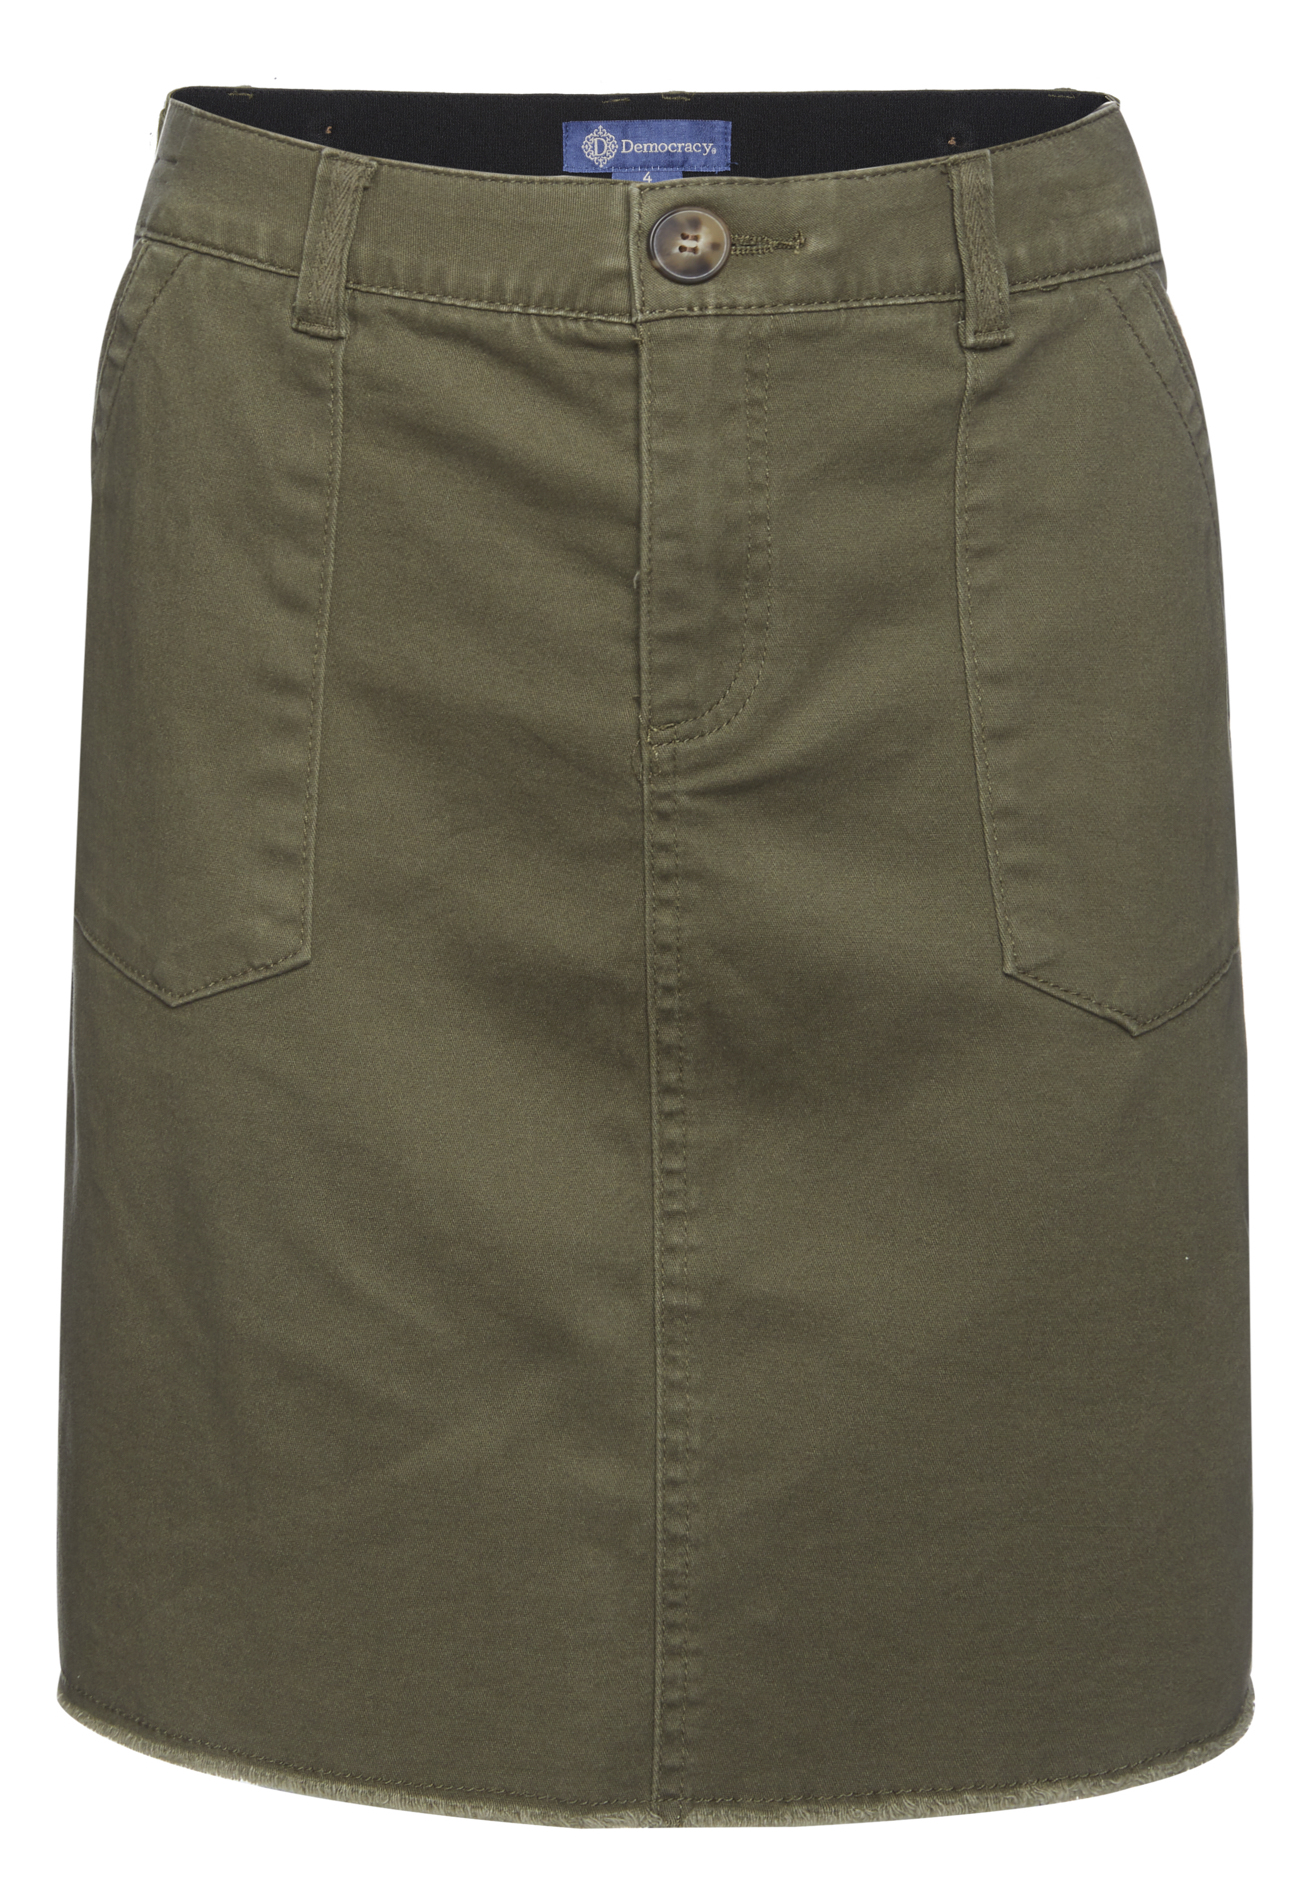 'Ab'solution A-Line Skirt